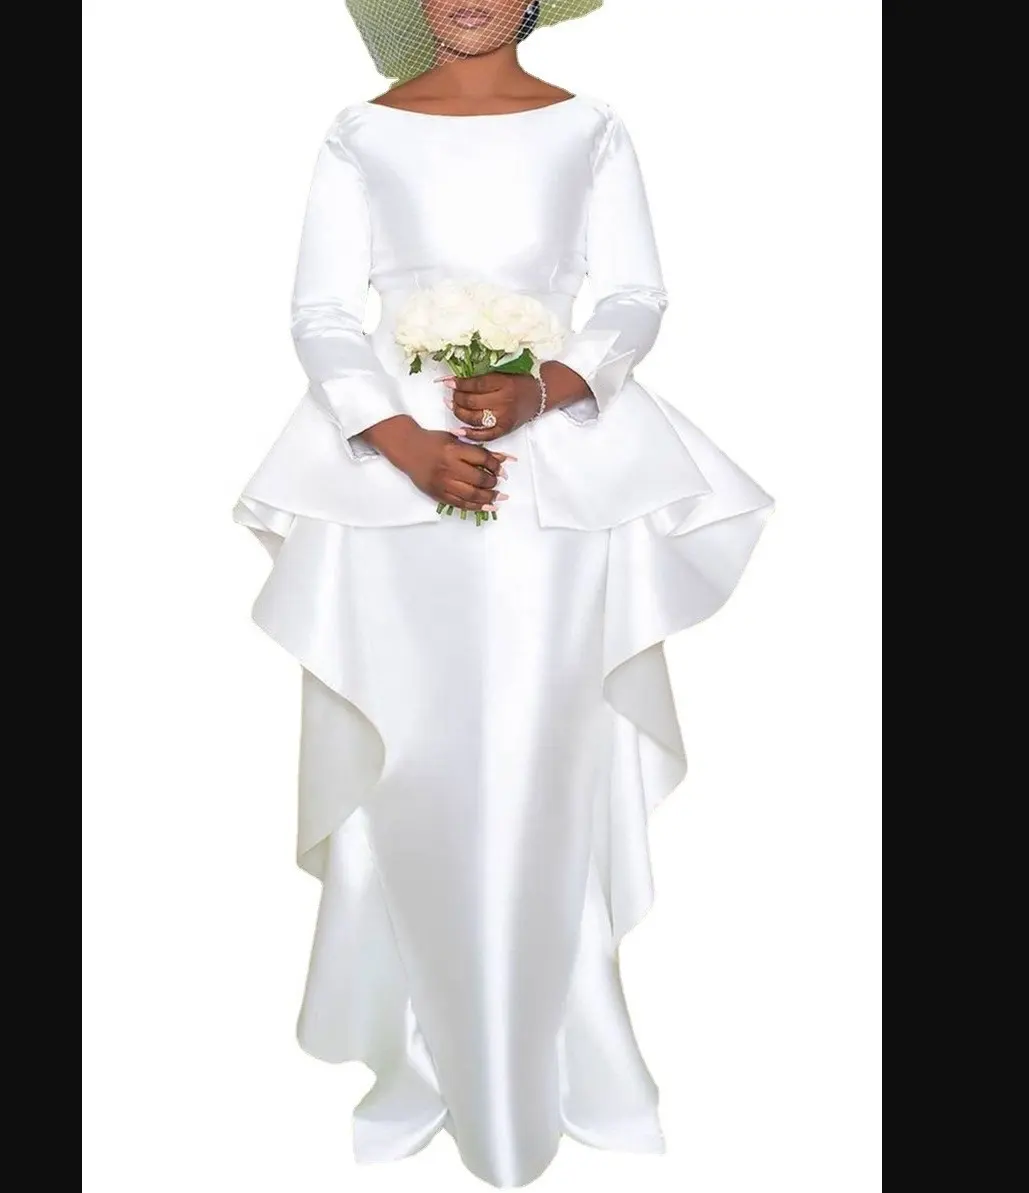 2022 latest style ladies evening gowns dress white dresses for woman elegant white dinner dress